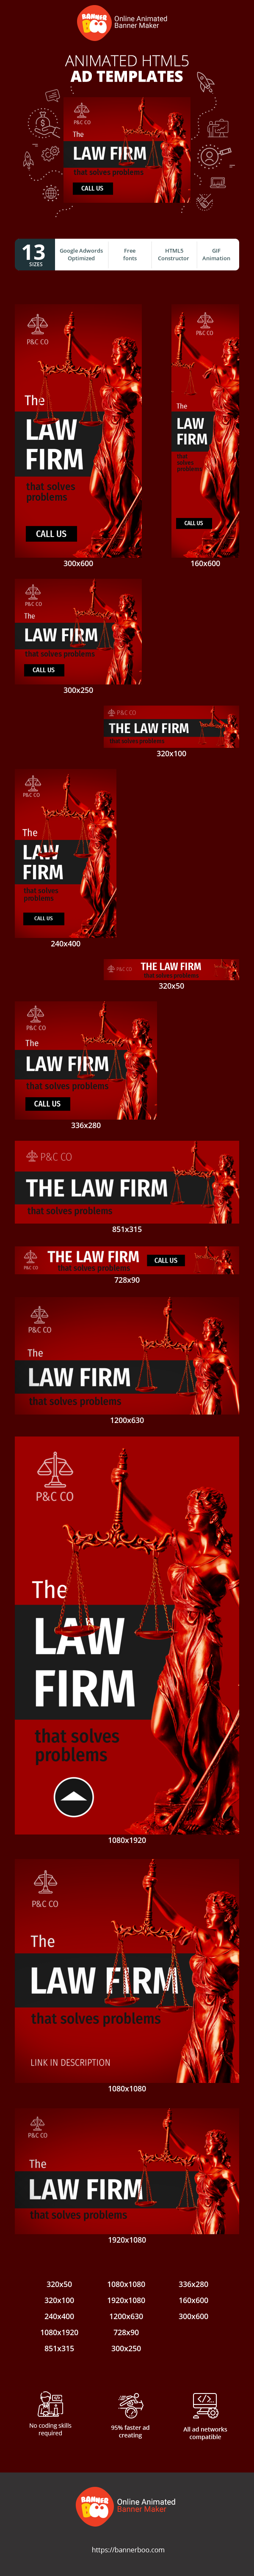 Шаблон рекламного банера — The Law Firm — That Solves Problems